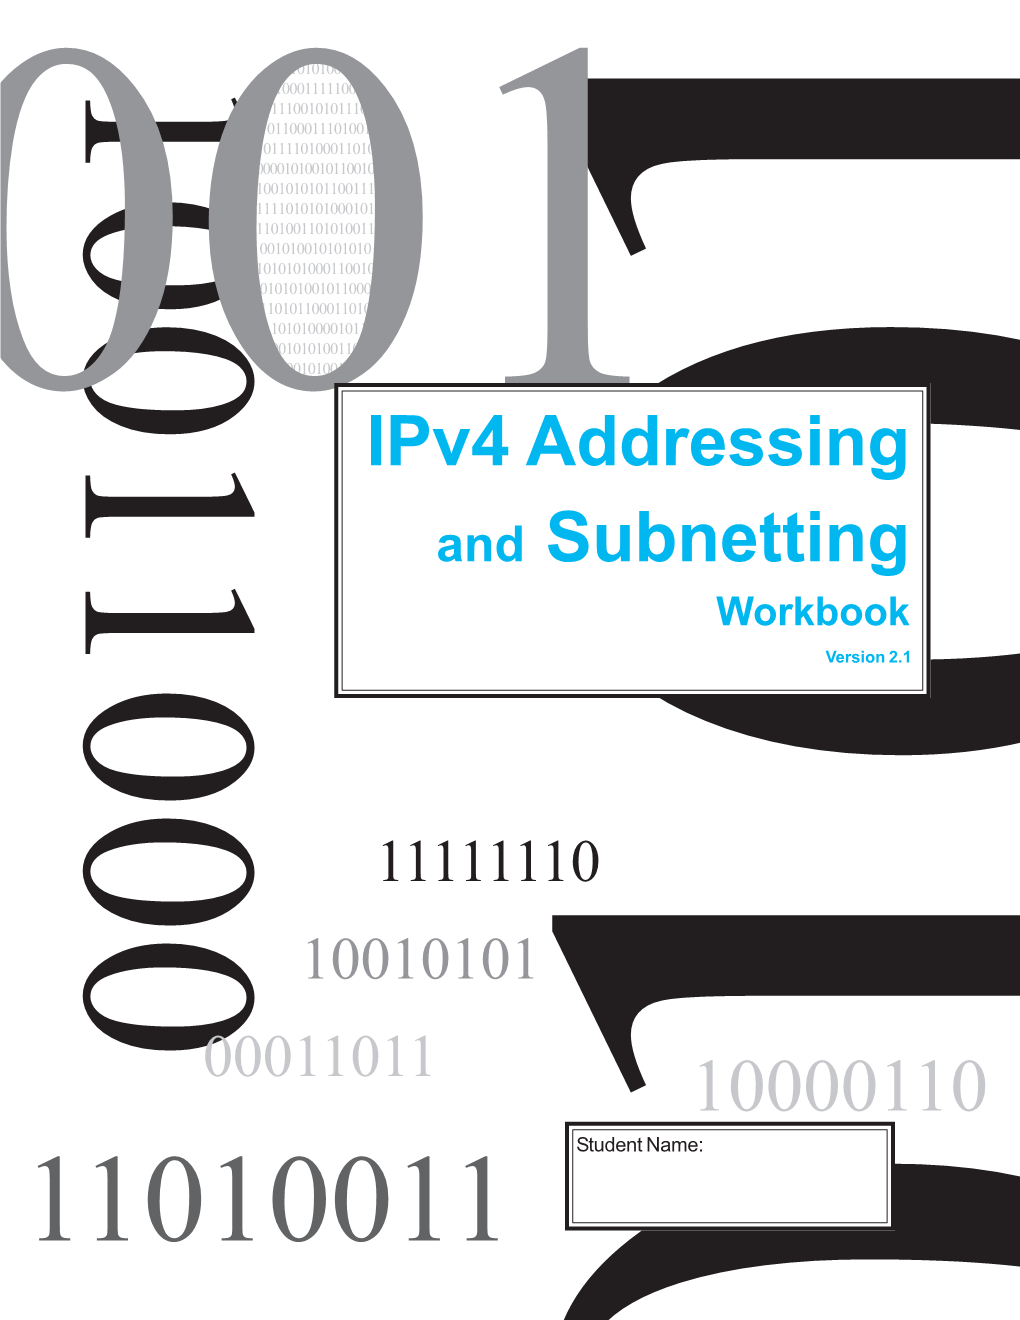 Ipv4 Addressing and Subnetting Workbook Version 2.1